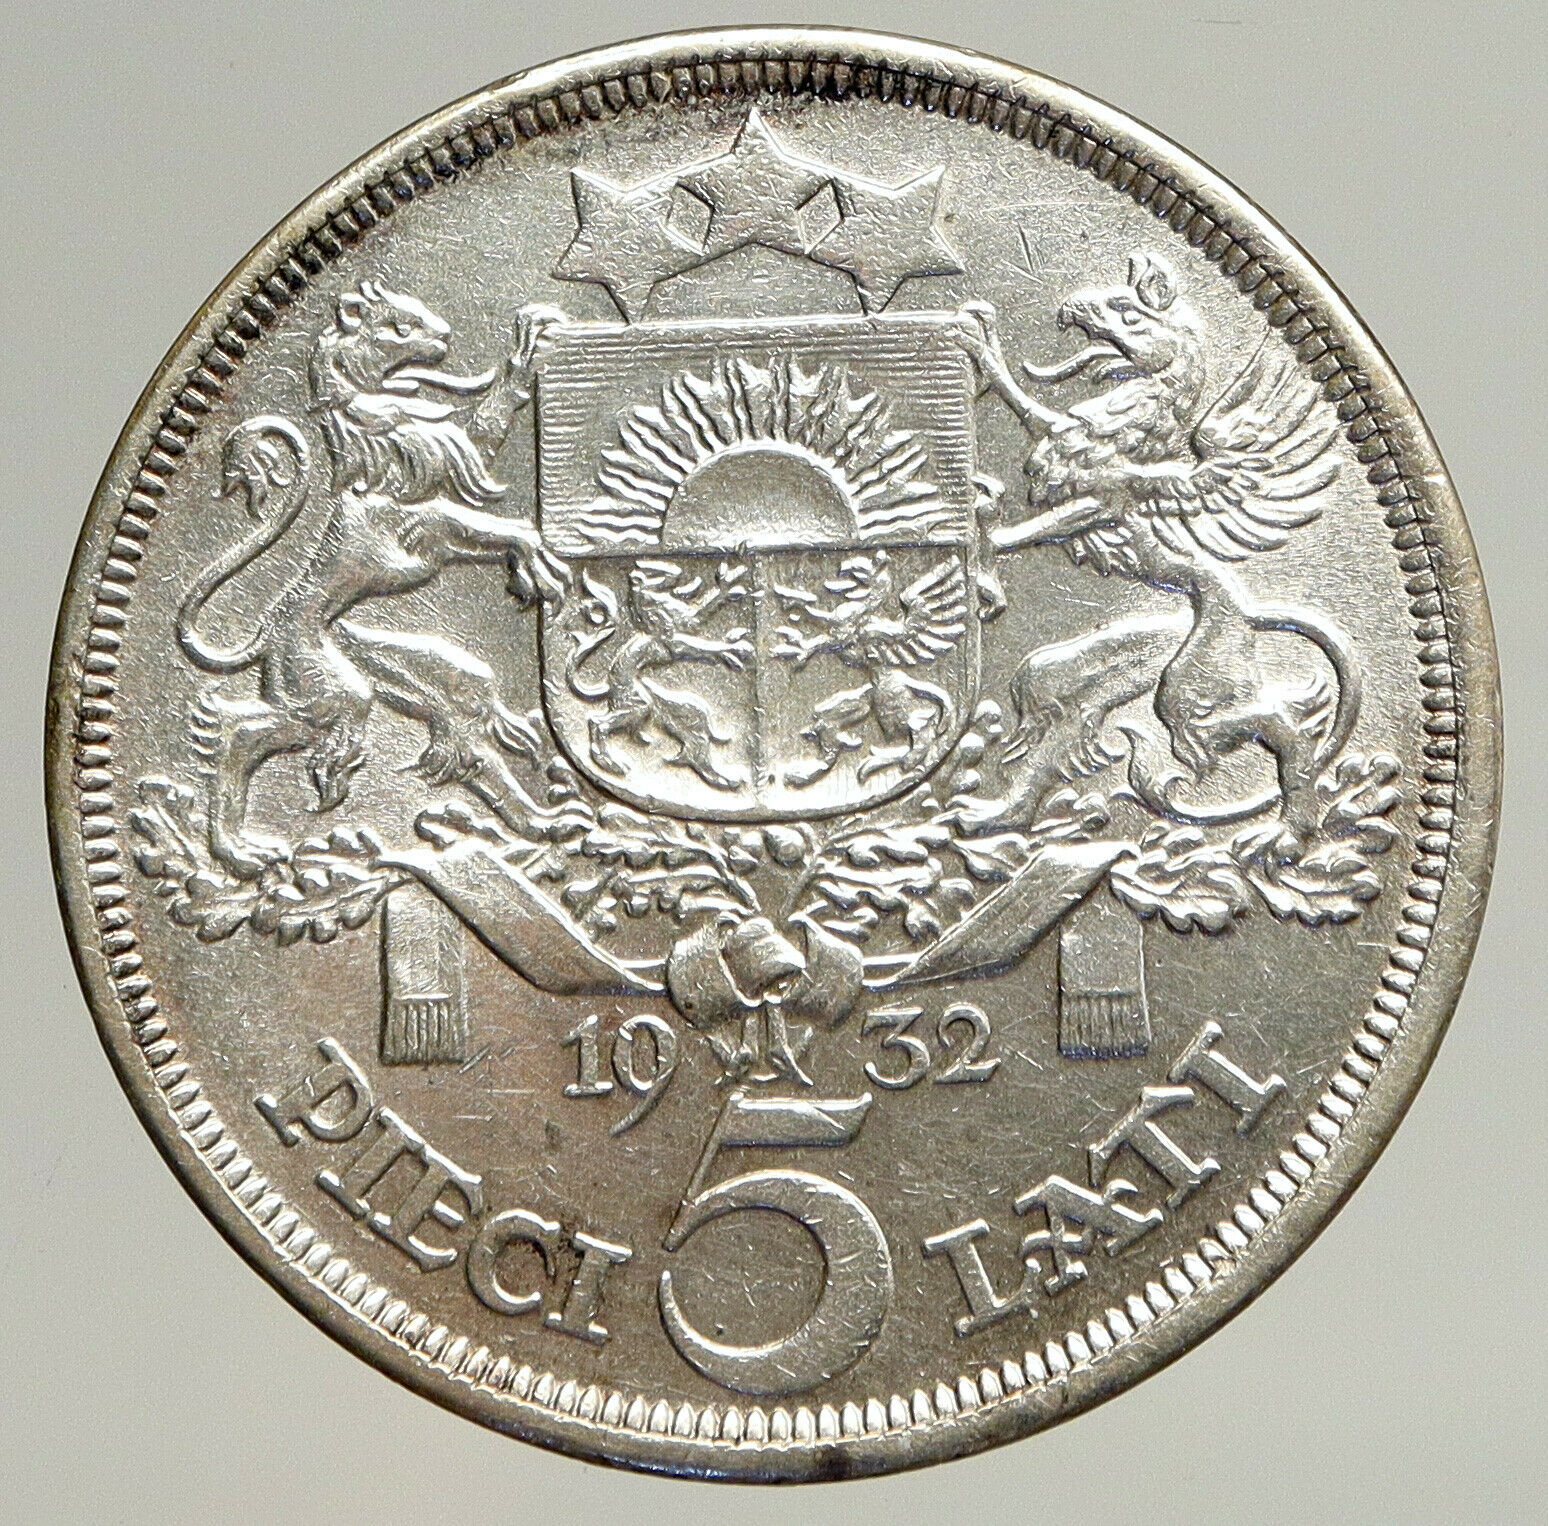 1932 LATVIA w Female Headwear 5 Lati LARGE Vintage Silver European Coin i93559